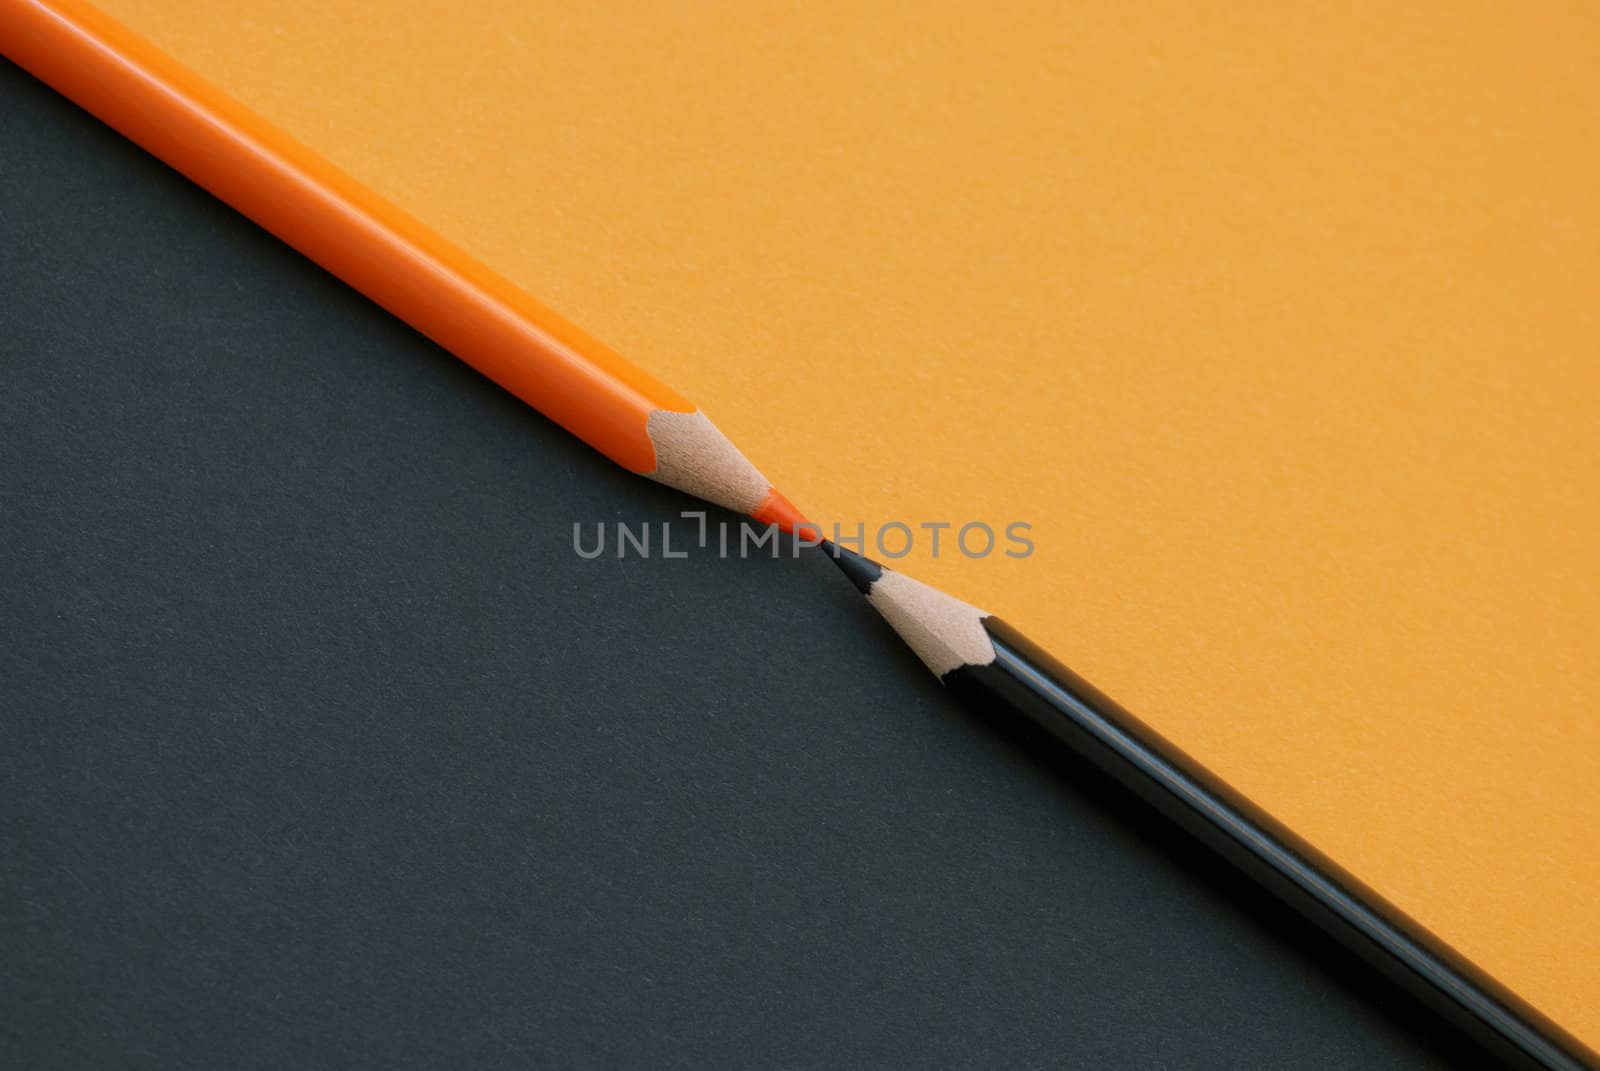 Two colored pencils diagonally